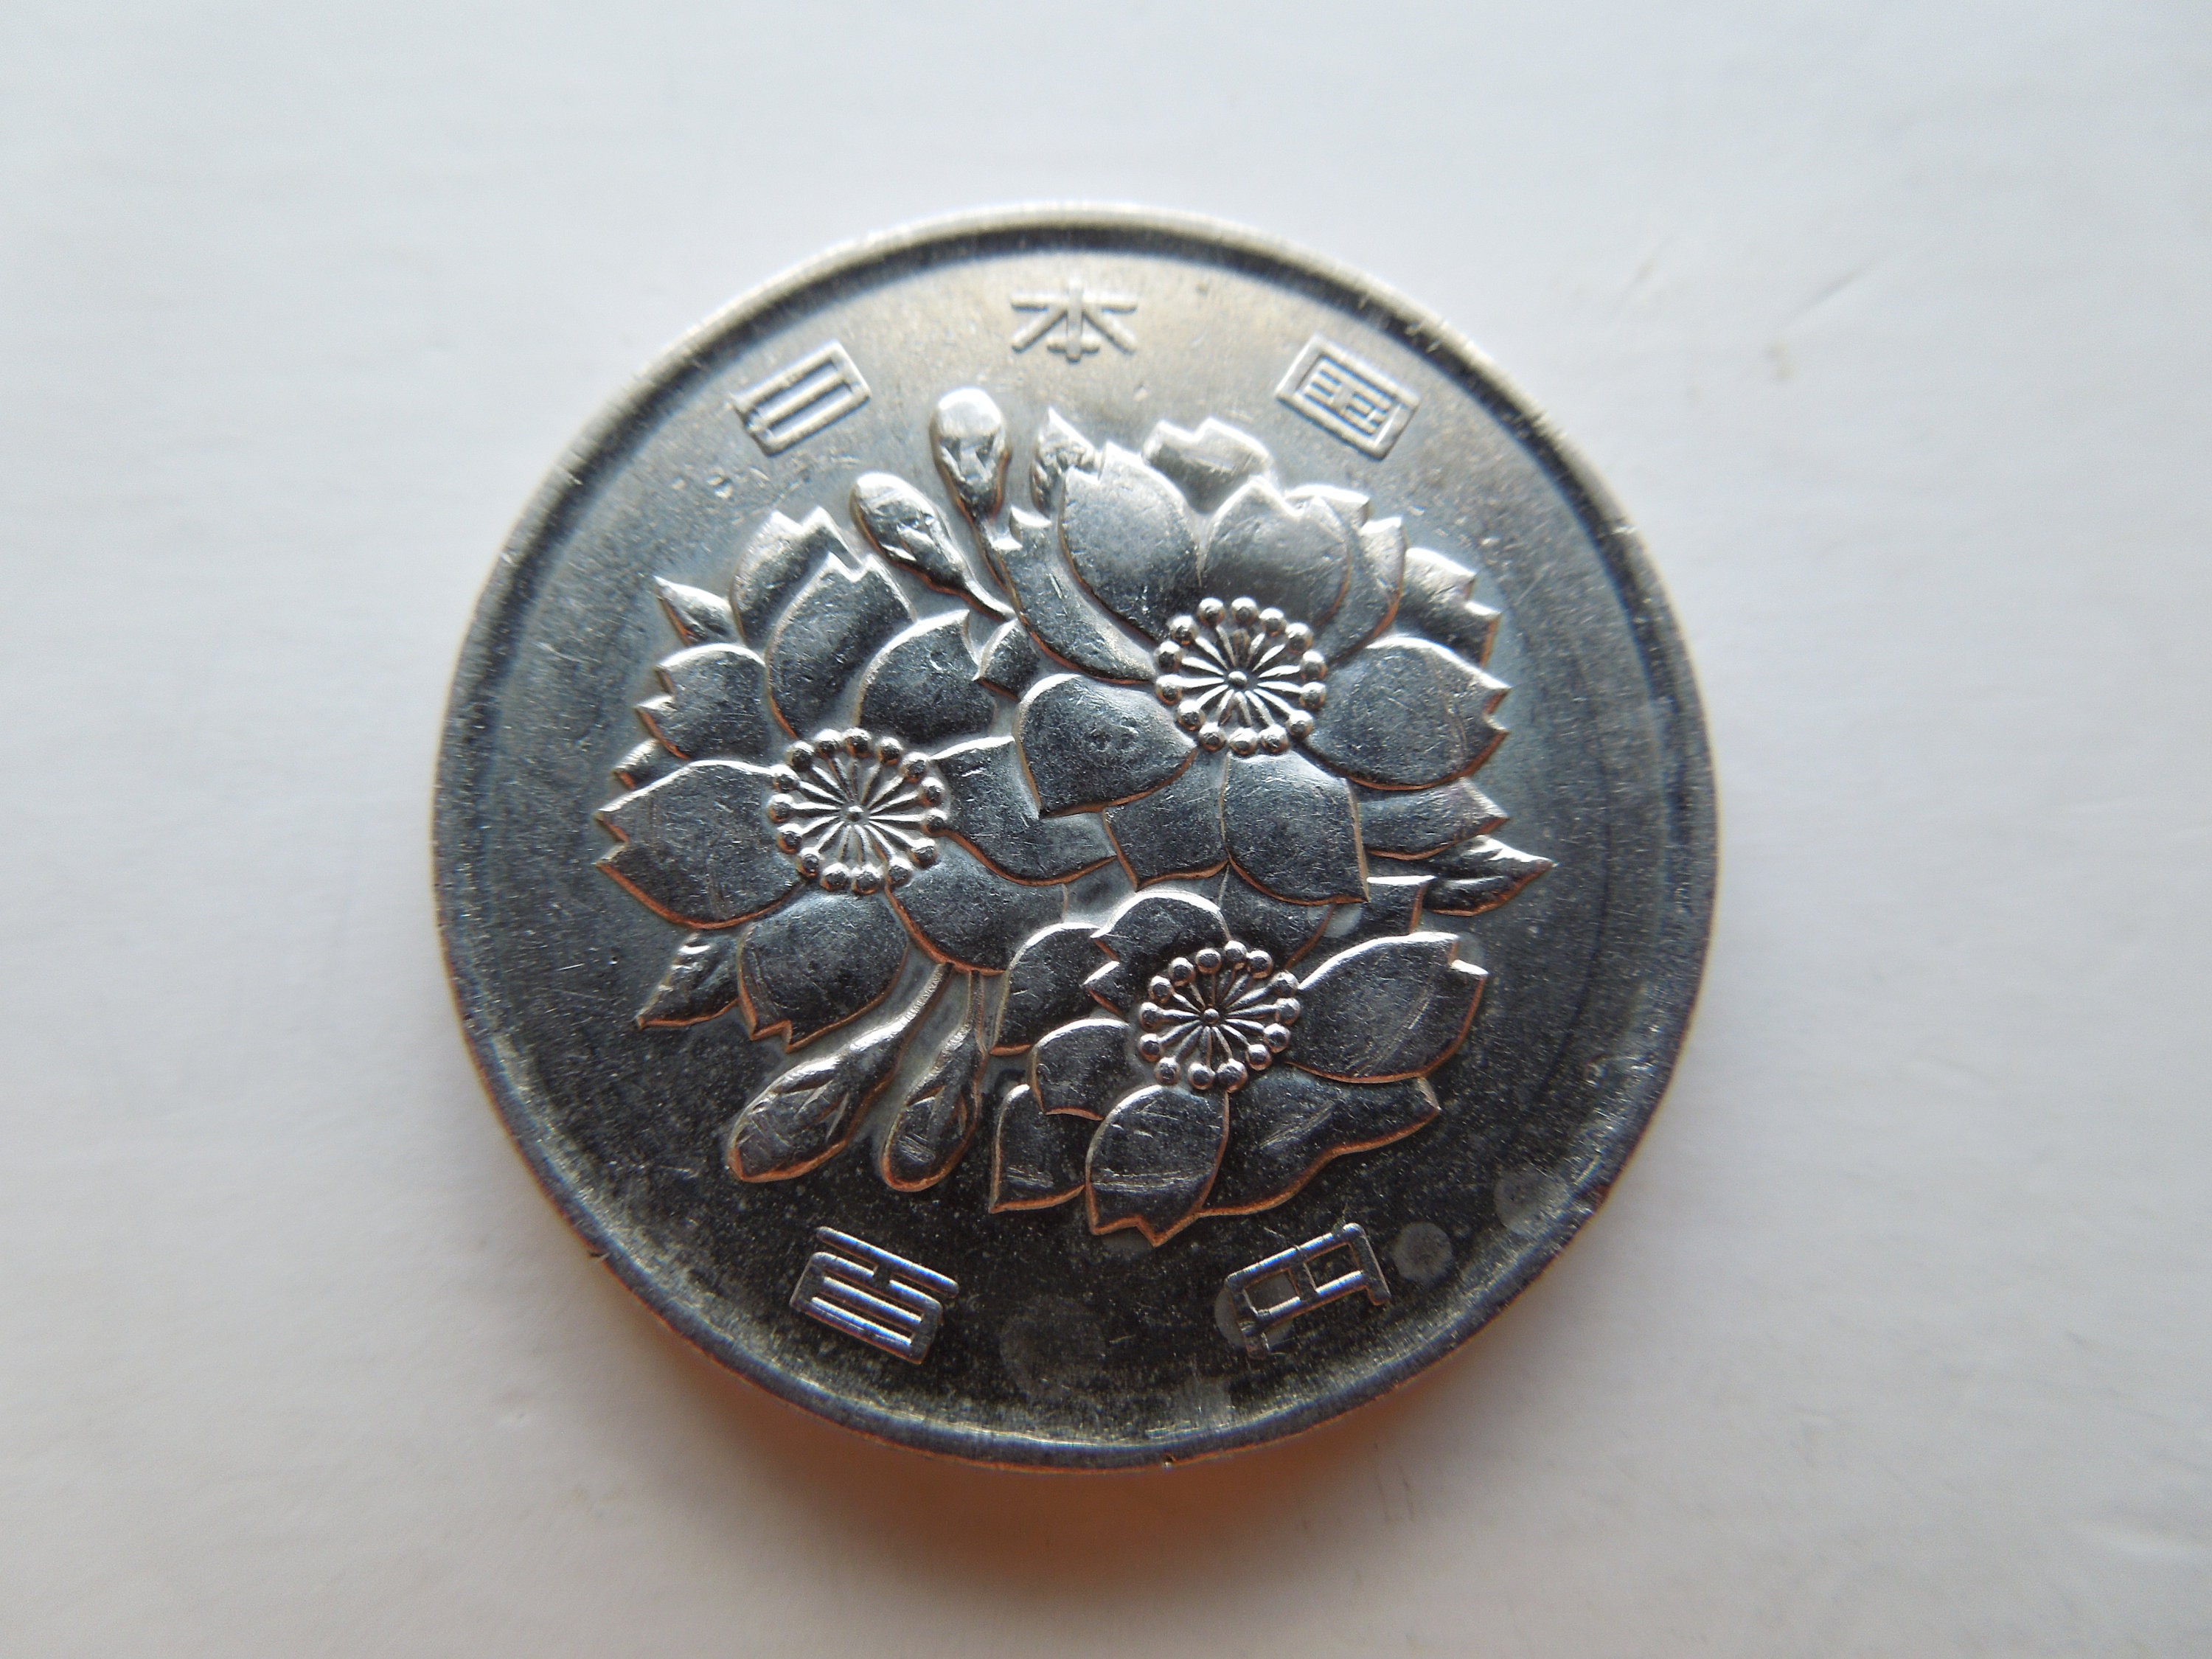 100 Yen Coin - Etsy